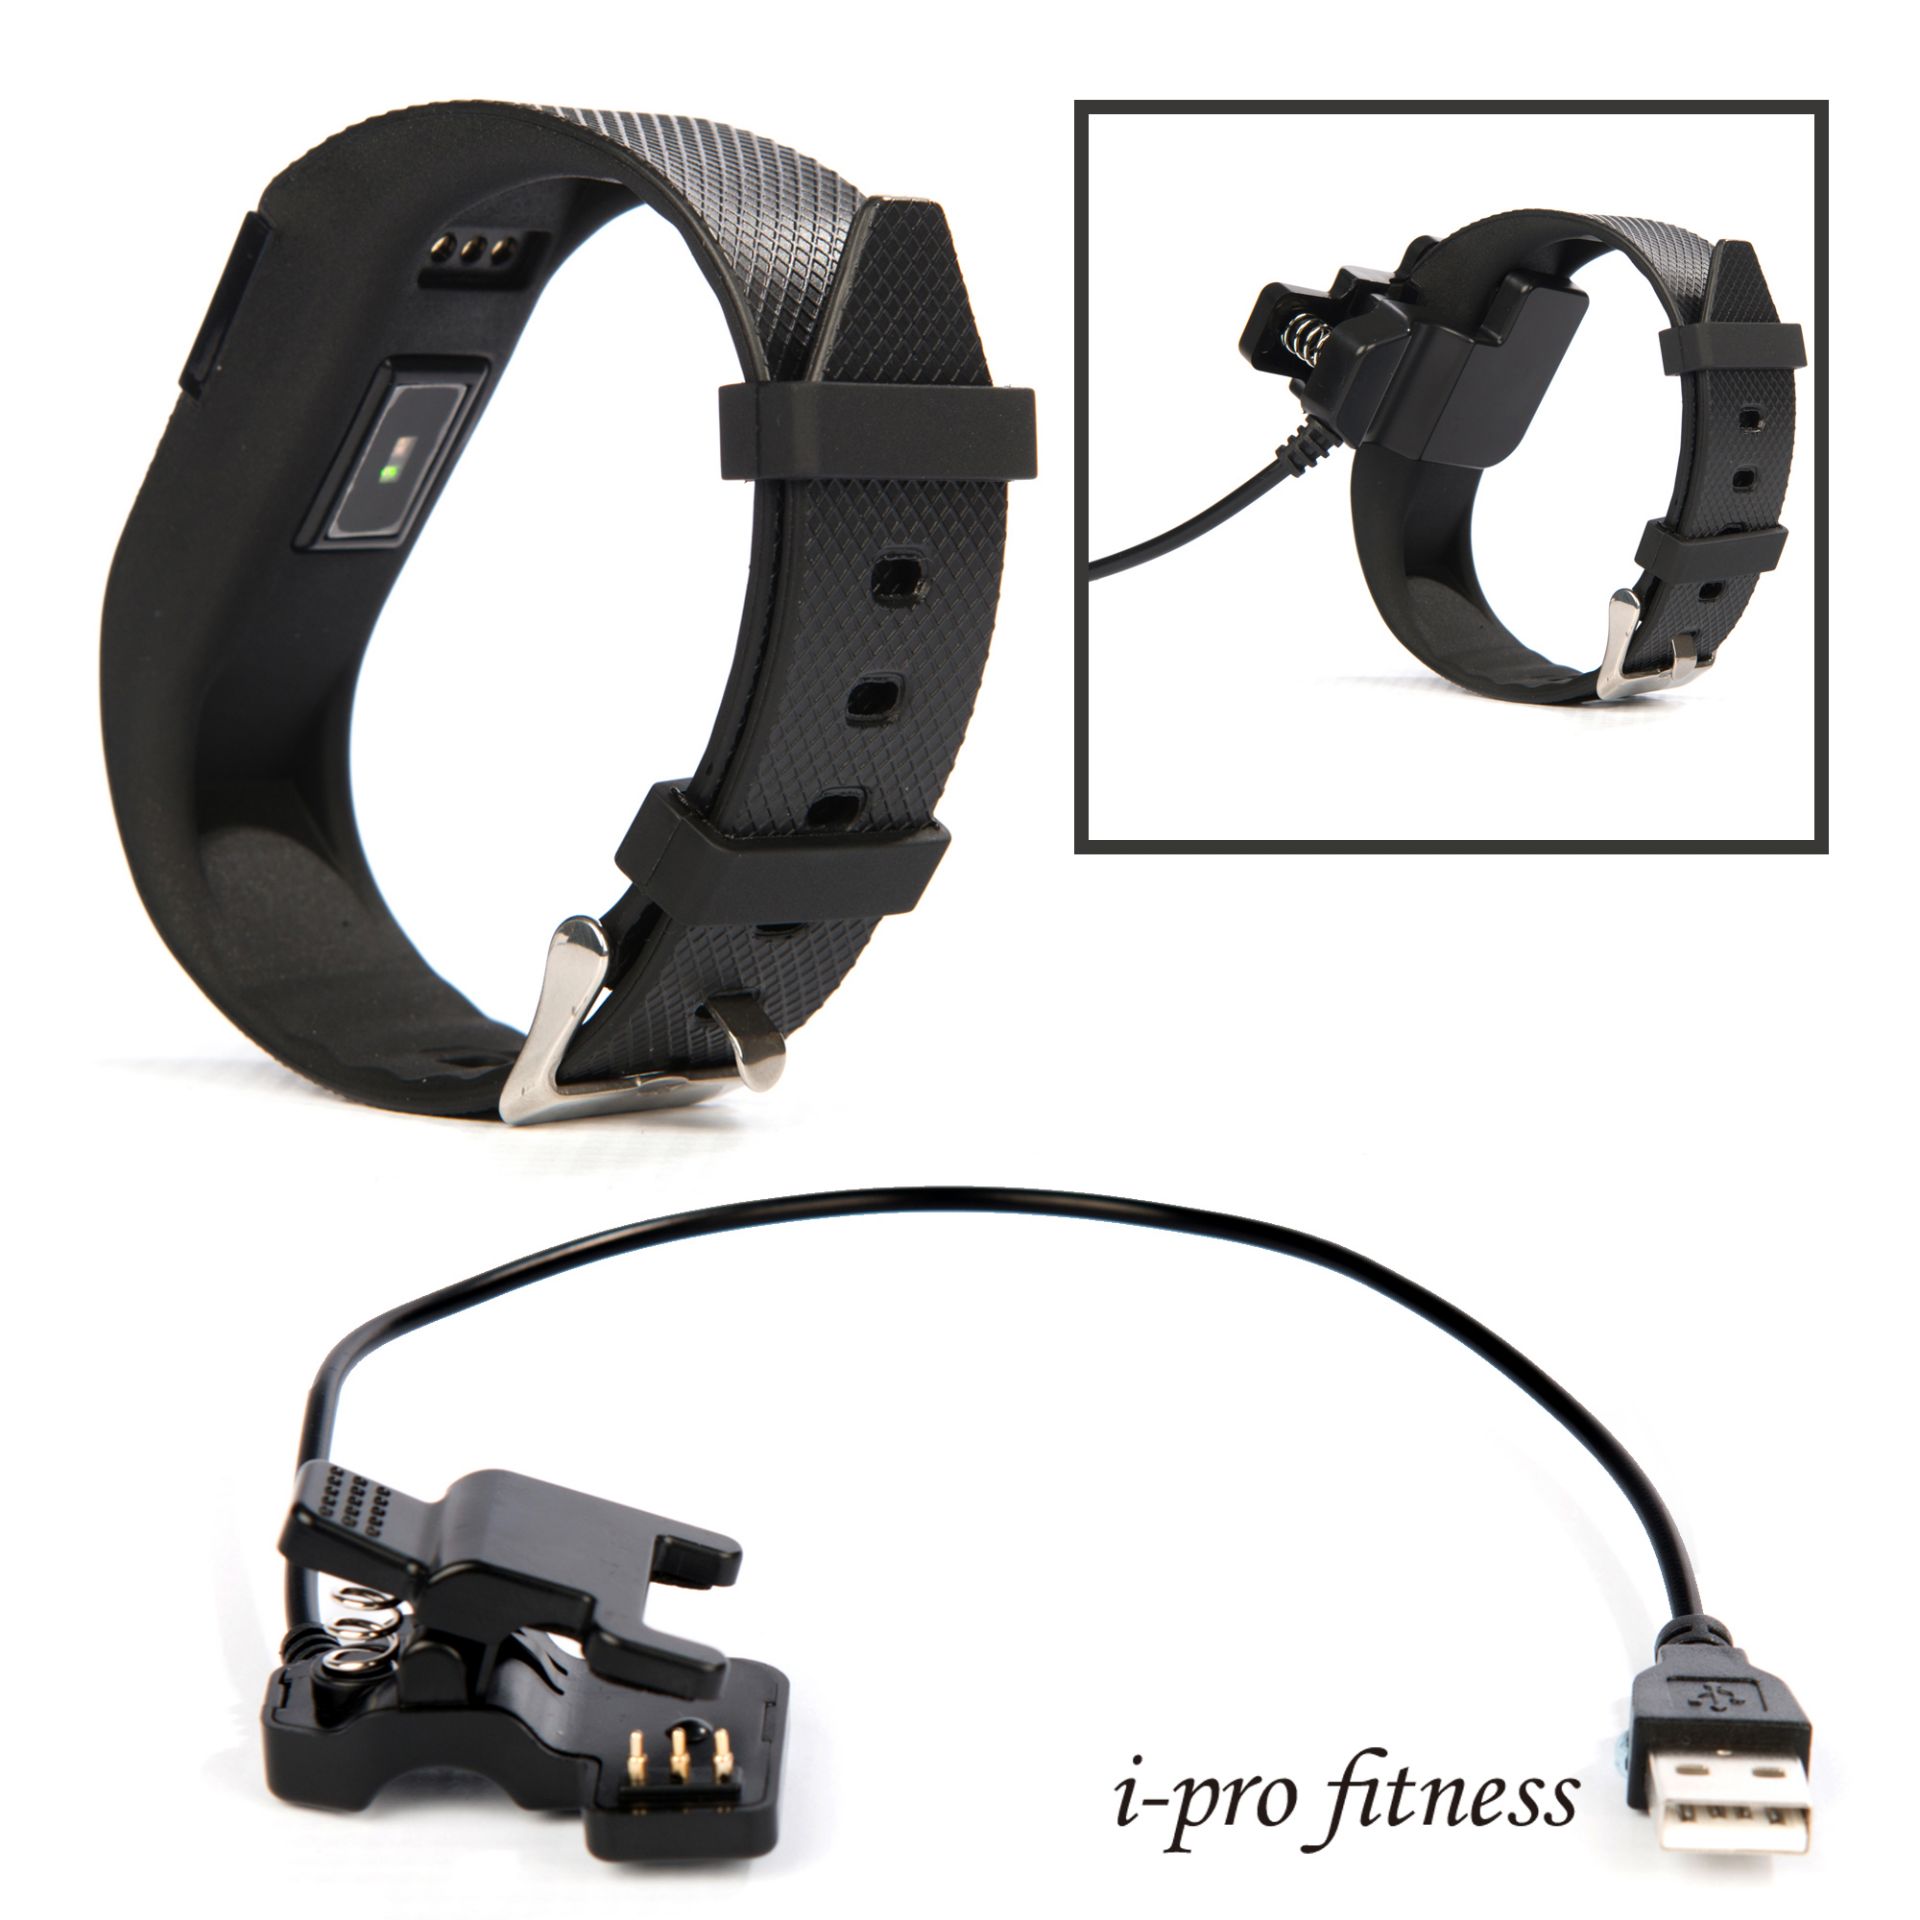 10x Fitness Tracker i-pro fitness, Bluetooth 4.0 Sports Smart Bracelet, Heart Rate Monitor, - Image 6 of 8